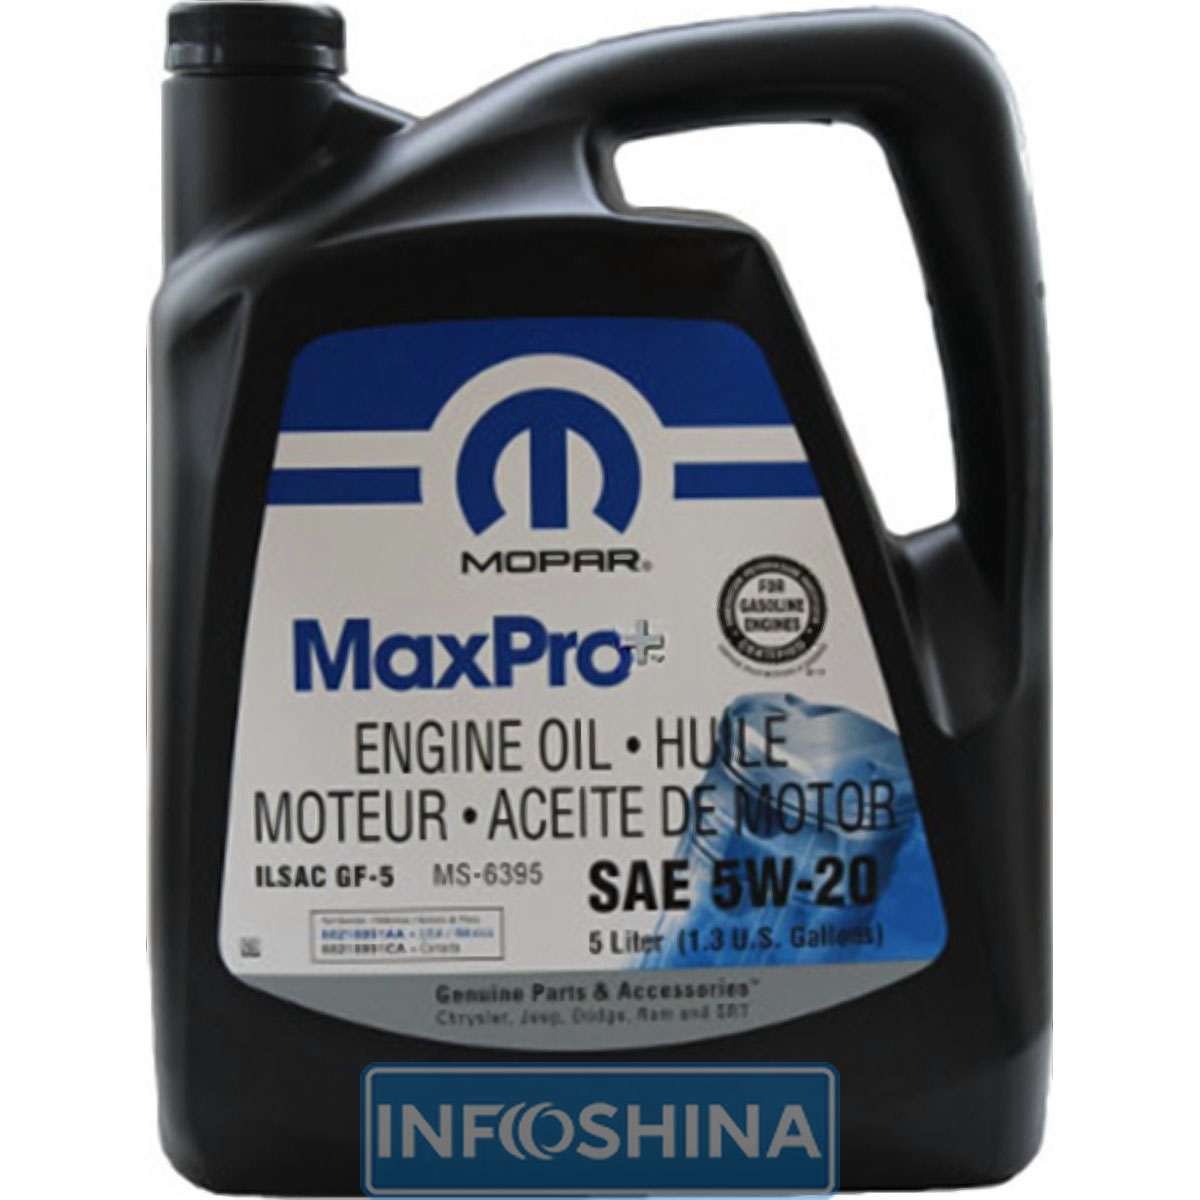 MOPAR MaxPro+ SAE 0W-20 Engine Oil